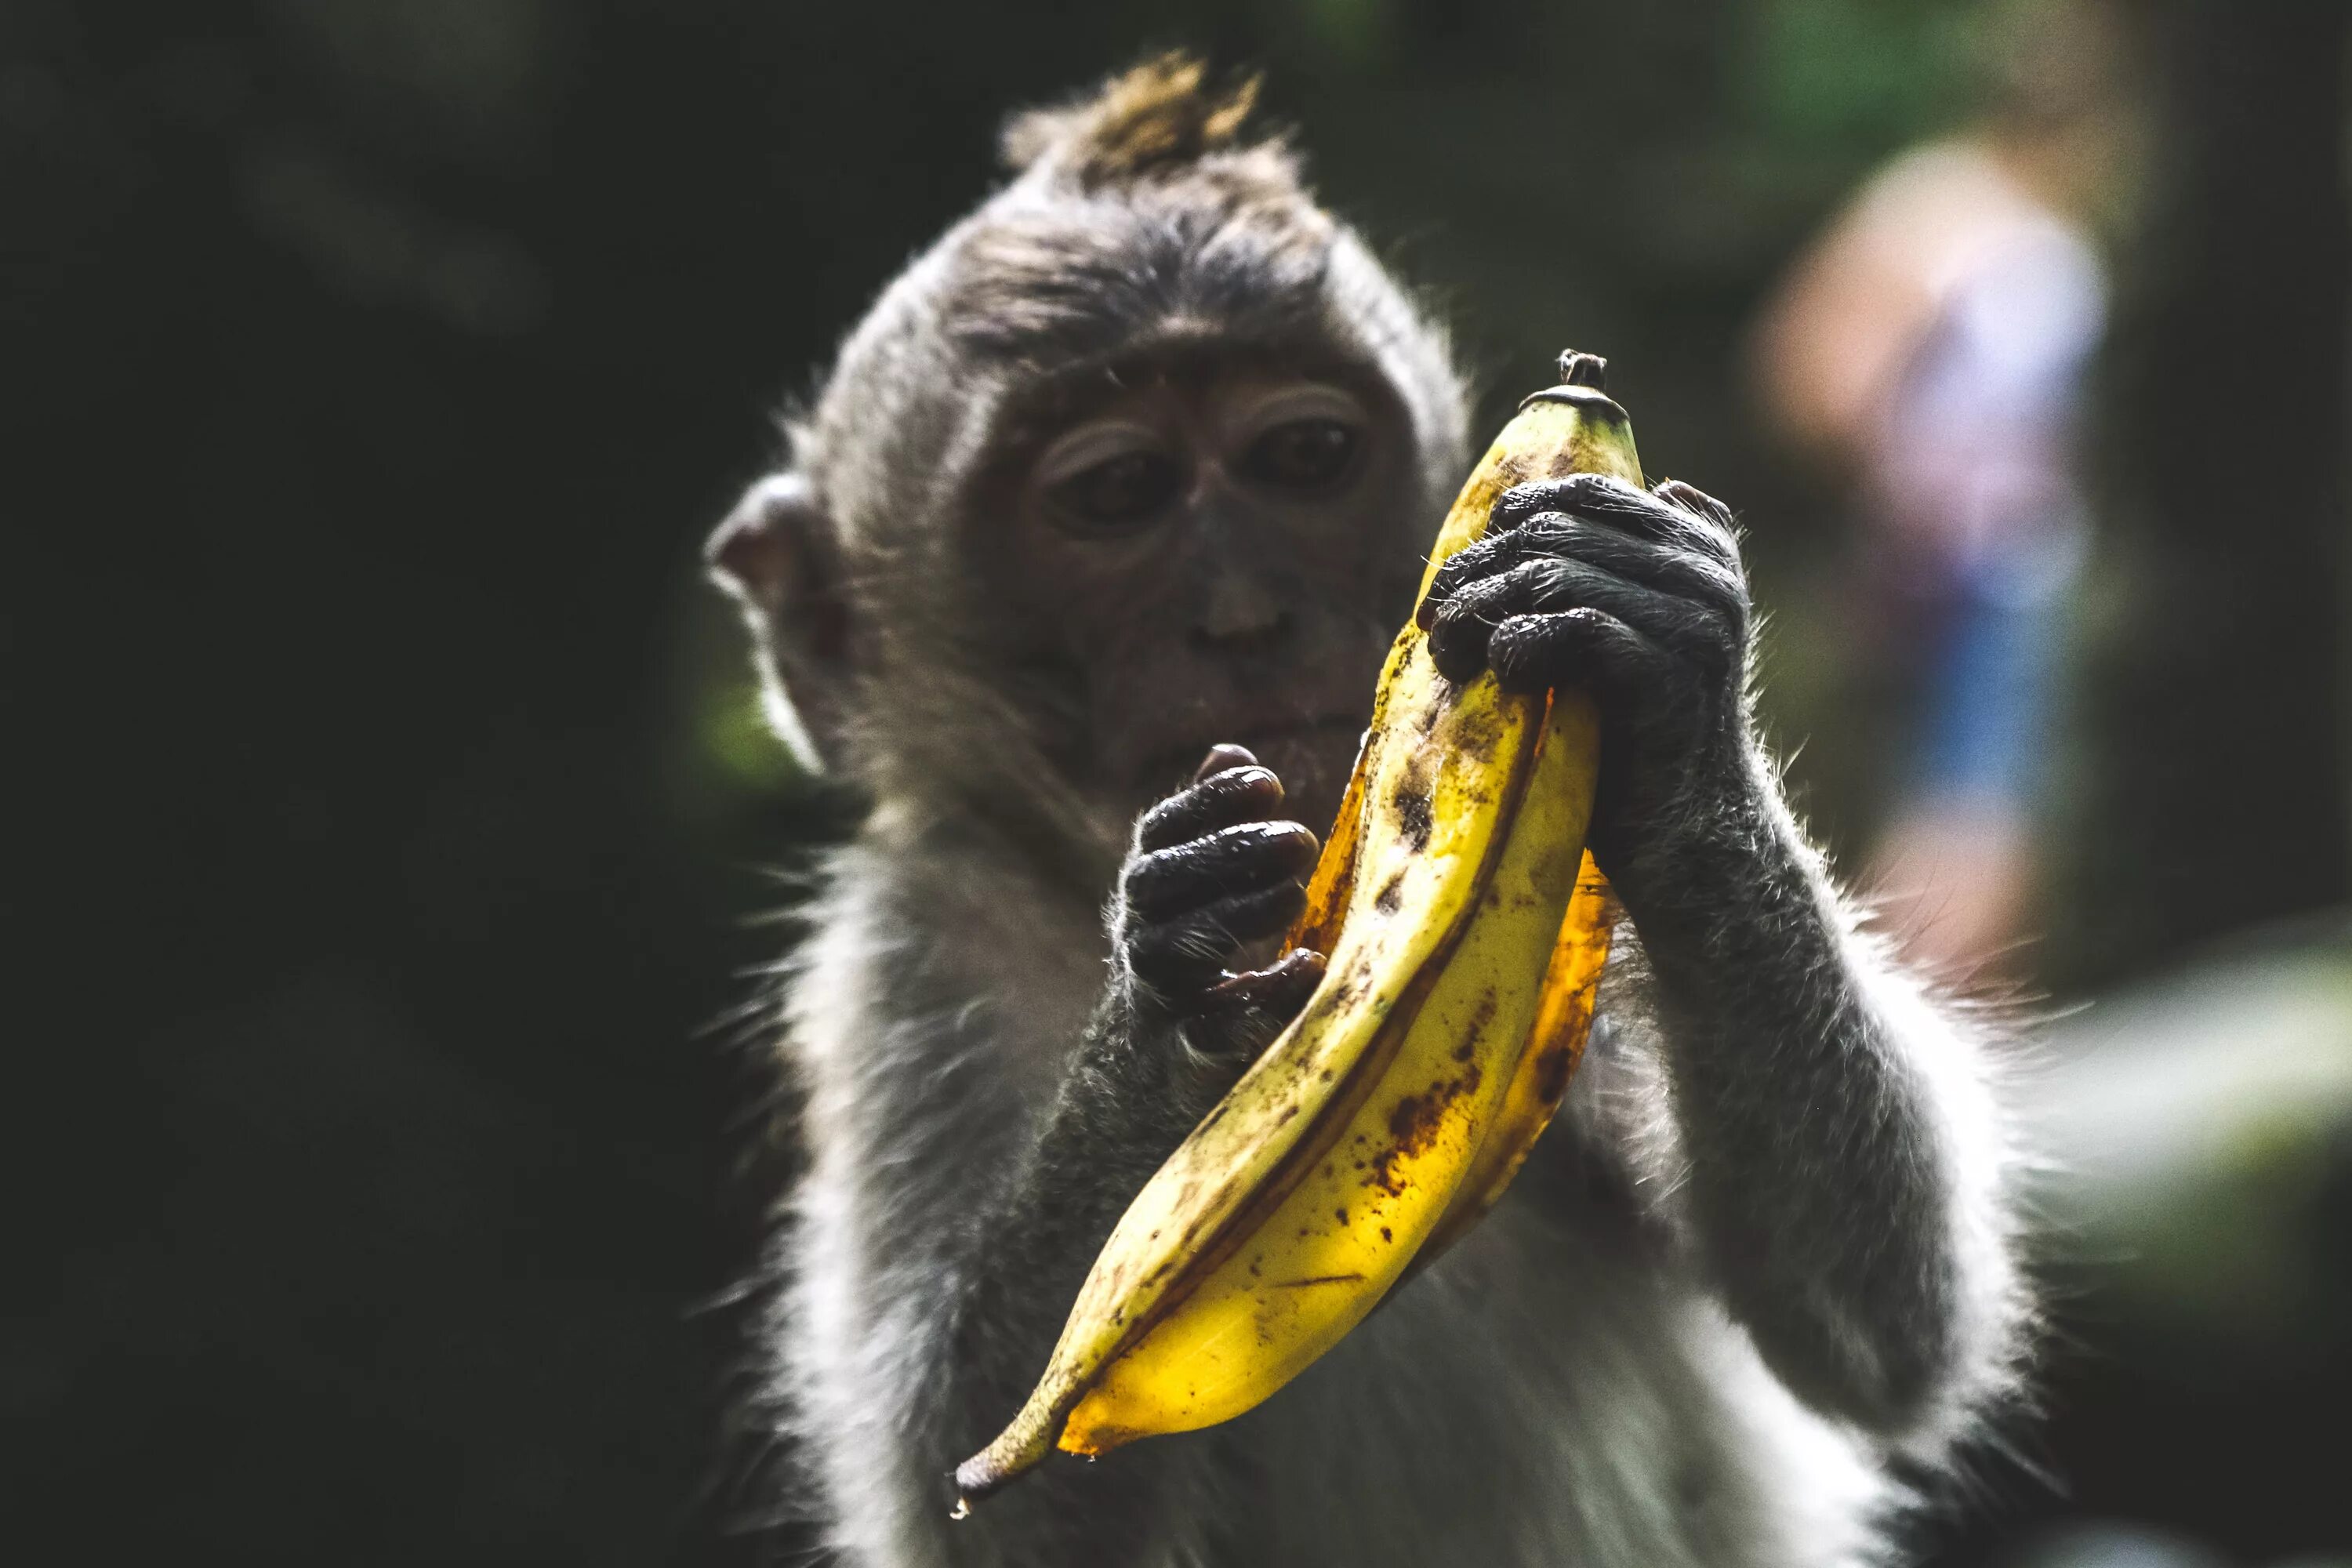 Обезьяны любят бананы. Обезьяна с бананом. Бибизьяна с бонаном. Obezyano s bansnom. Шимпанзе с бананом.